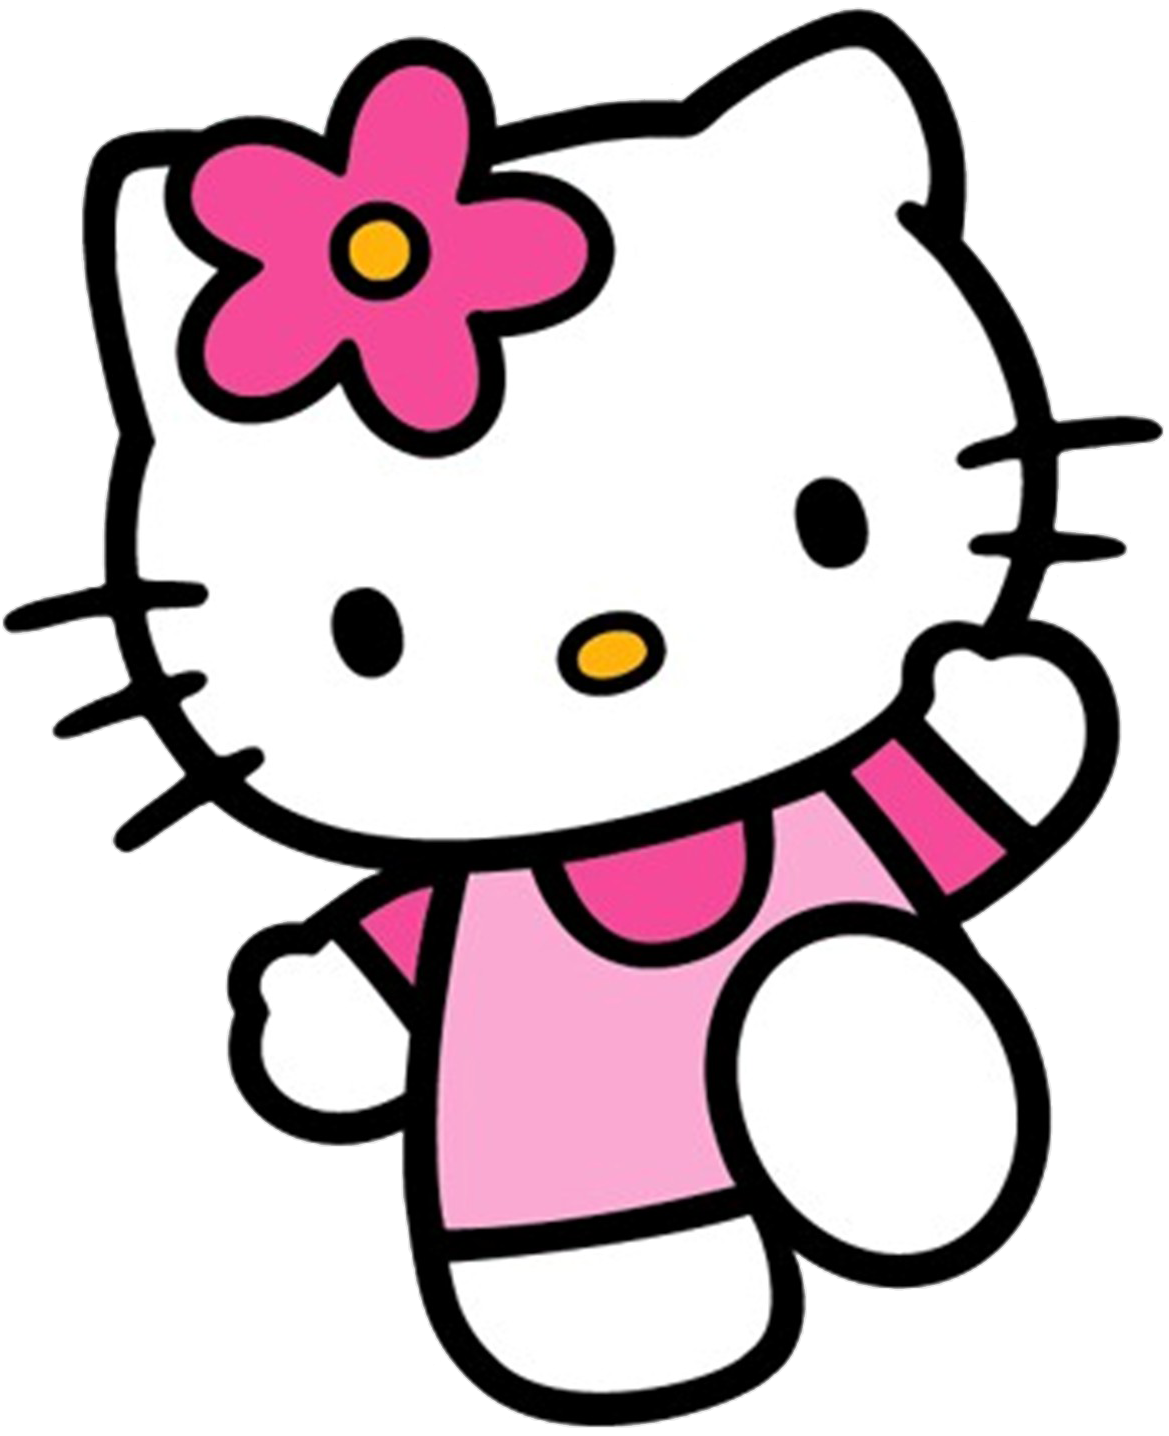 Corpo Da Hello Kitty Arquivo Em Png Hello Kitty Drawing Hello Kitty